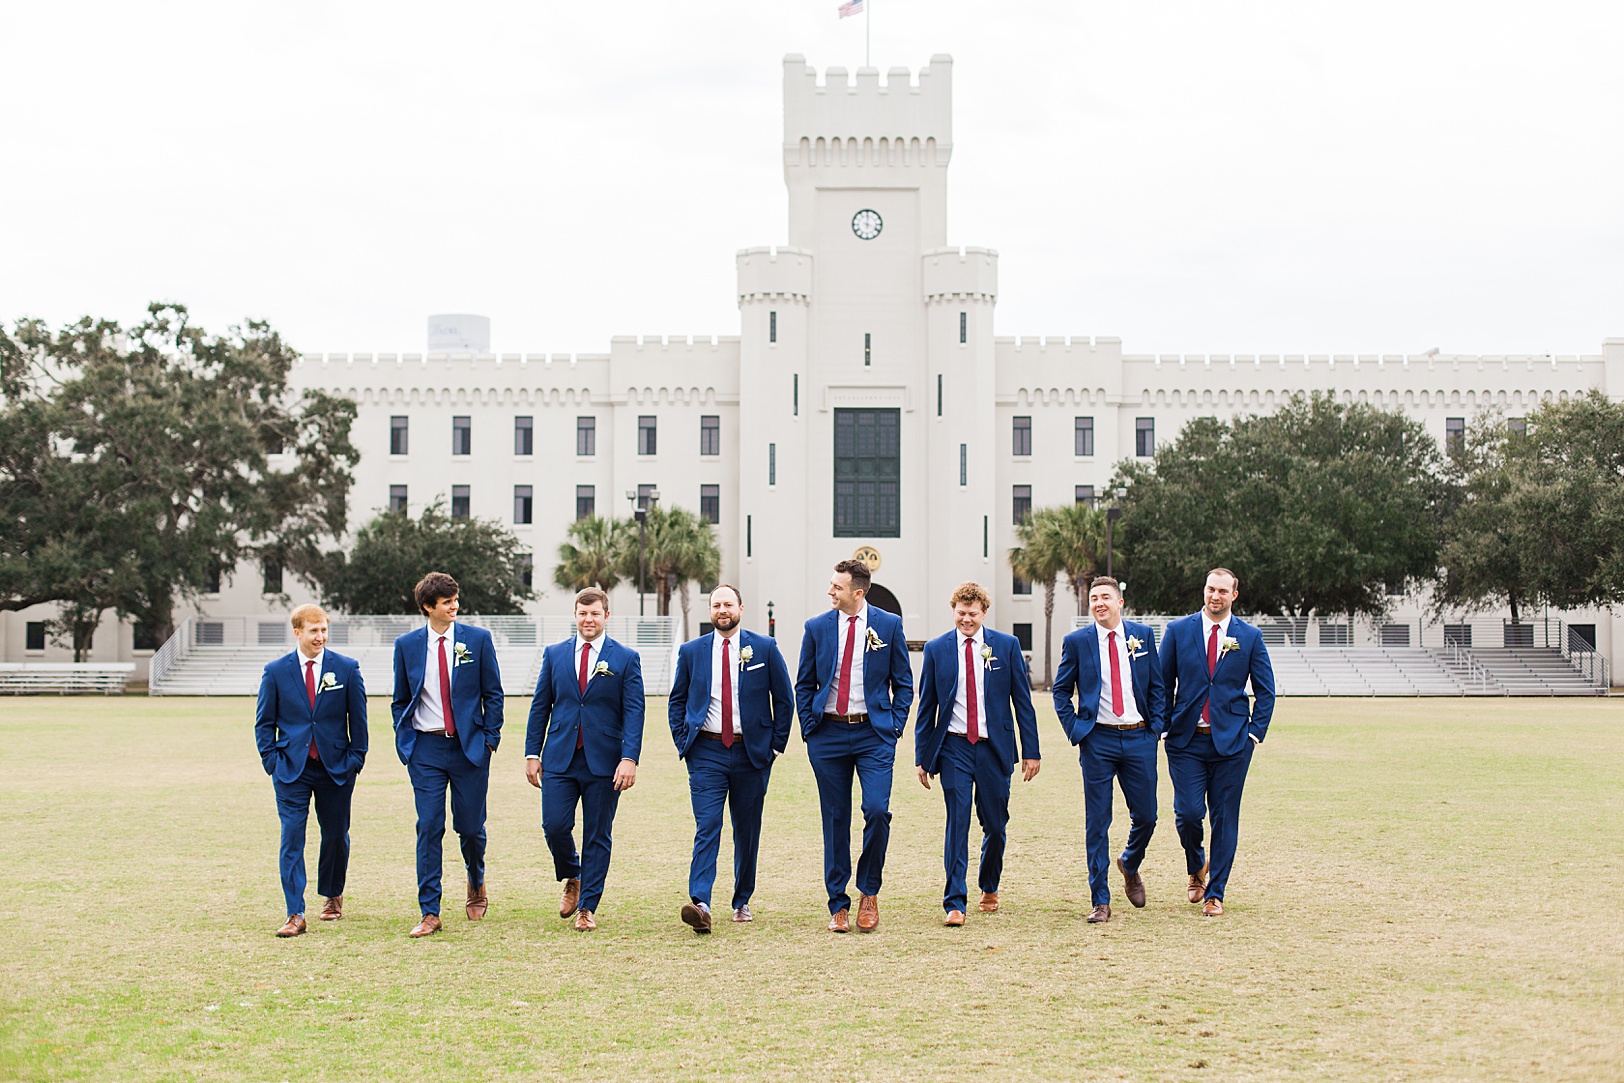 Winter Wedding, Groomsmen in blue suits and burgundy ties at Charleston Citadel | Kaitlin Scott Photography